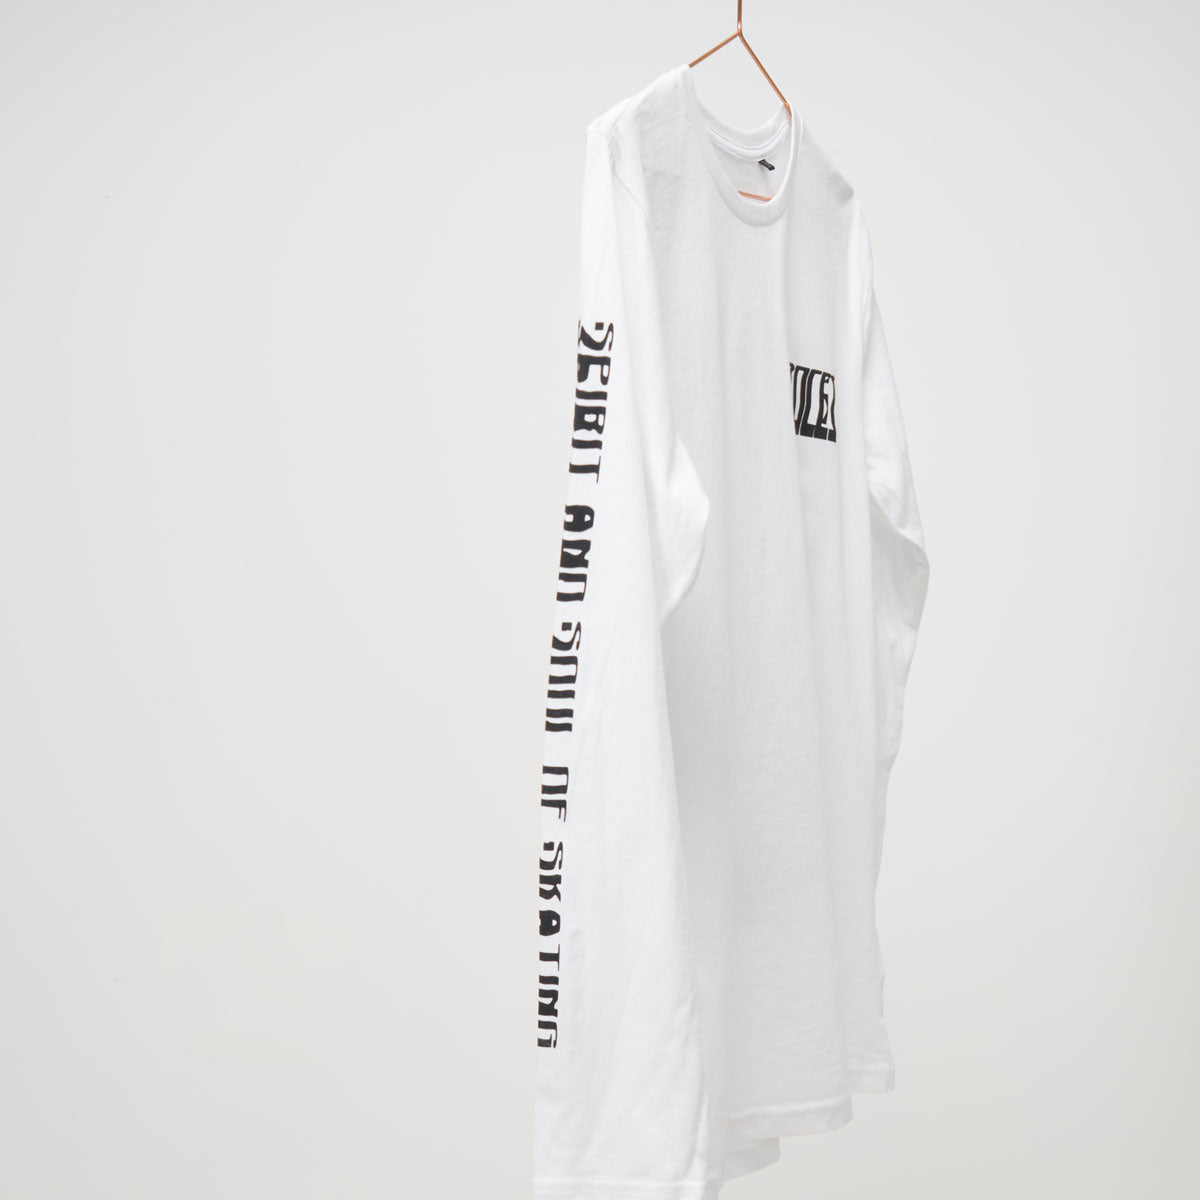 Roces 'Glitch' Longsleeve T-shirt - White